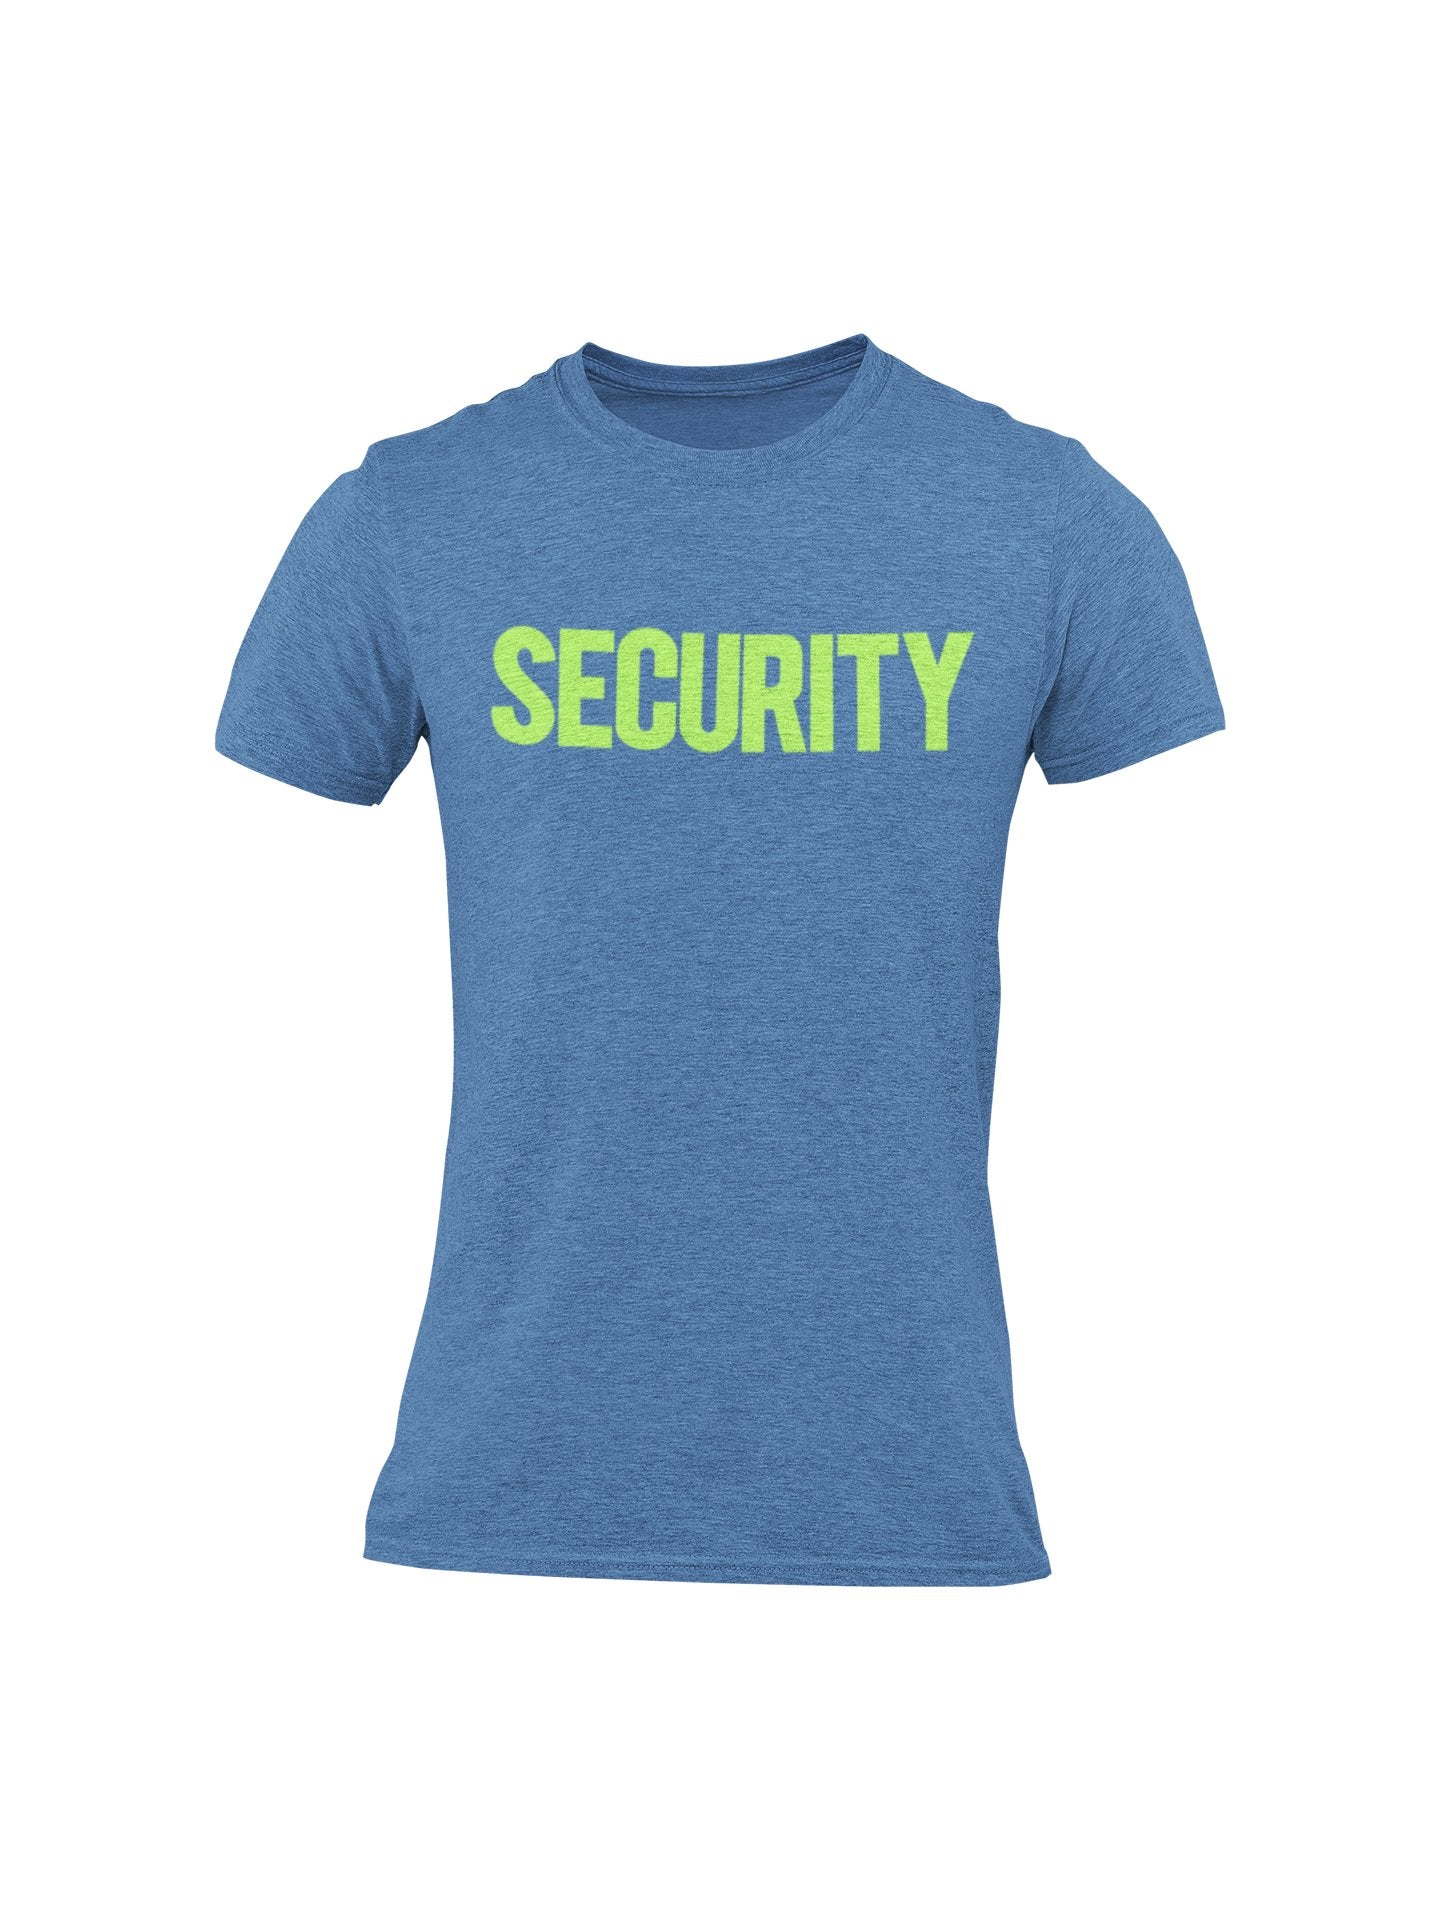 Security T-Shirt Front Back Print Men's Tee Staff Event Uniform Bounce